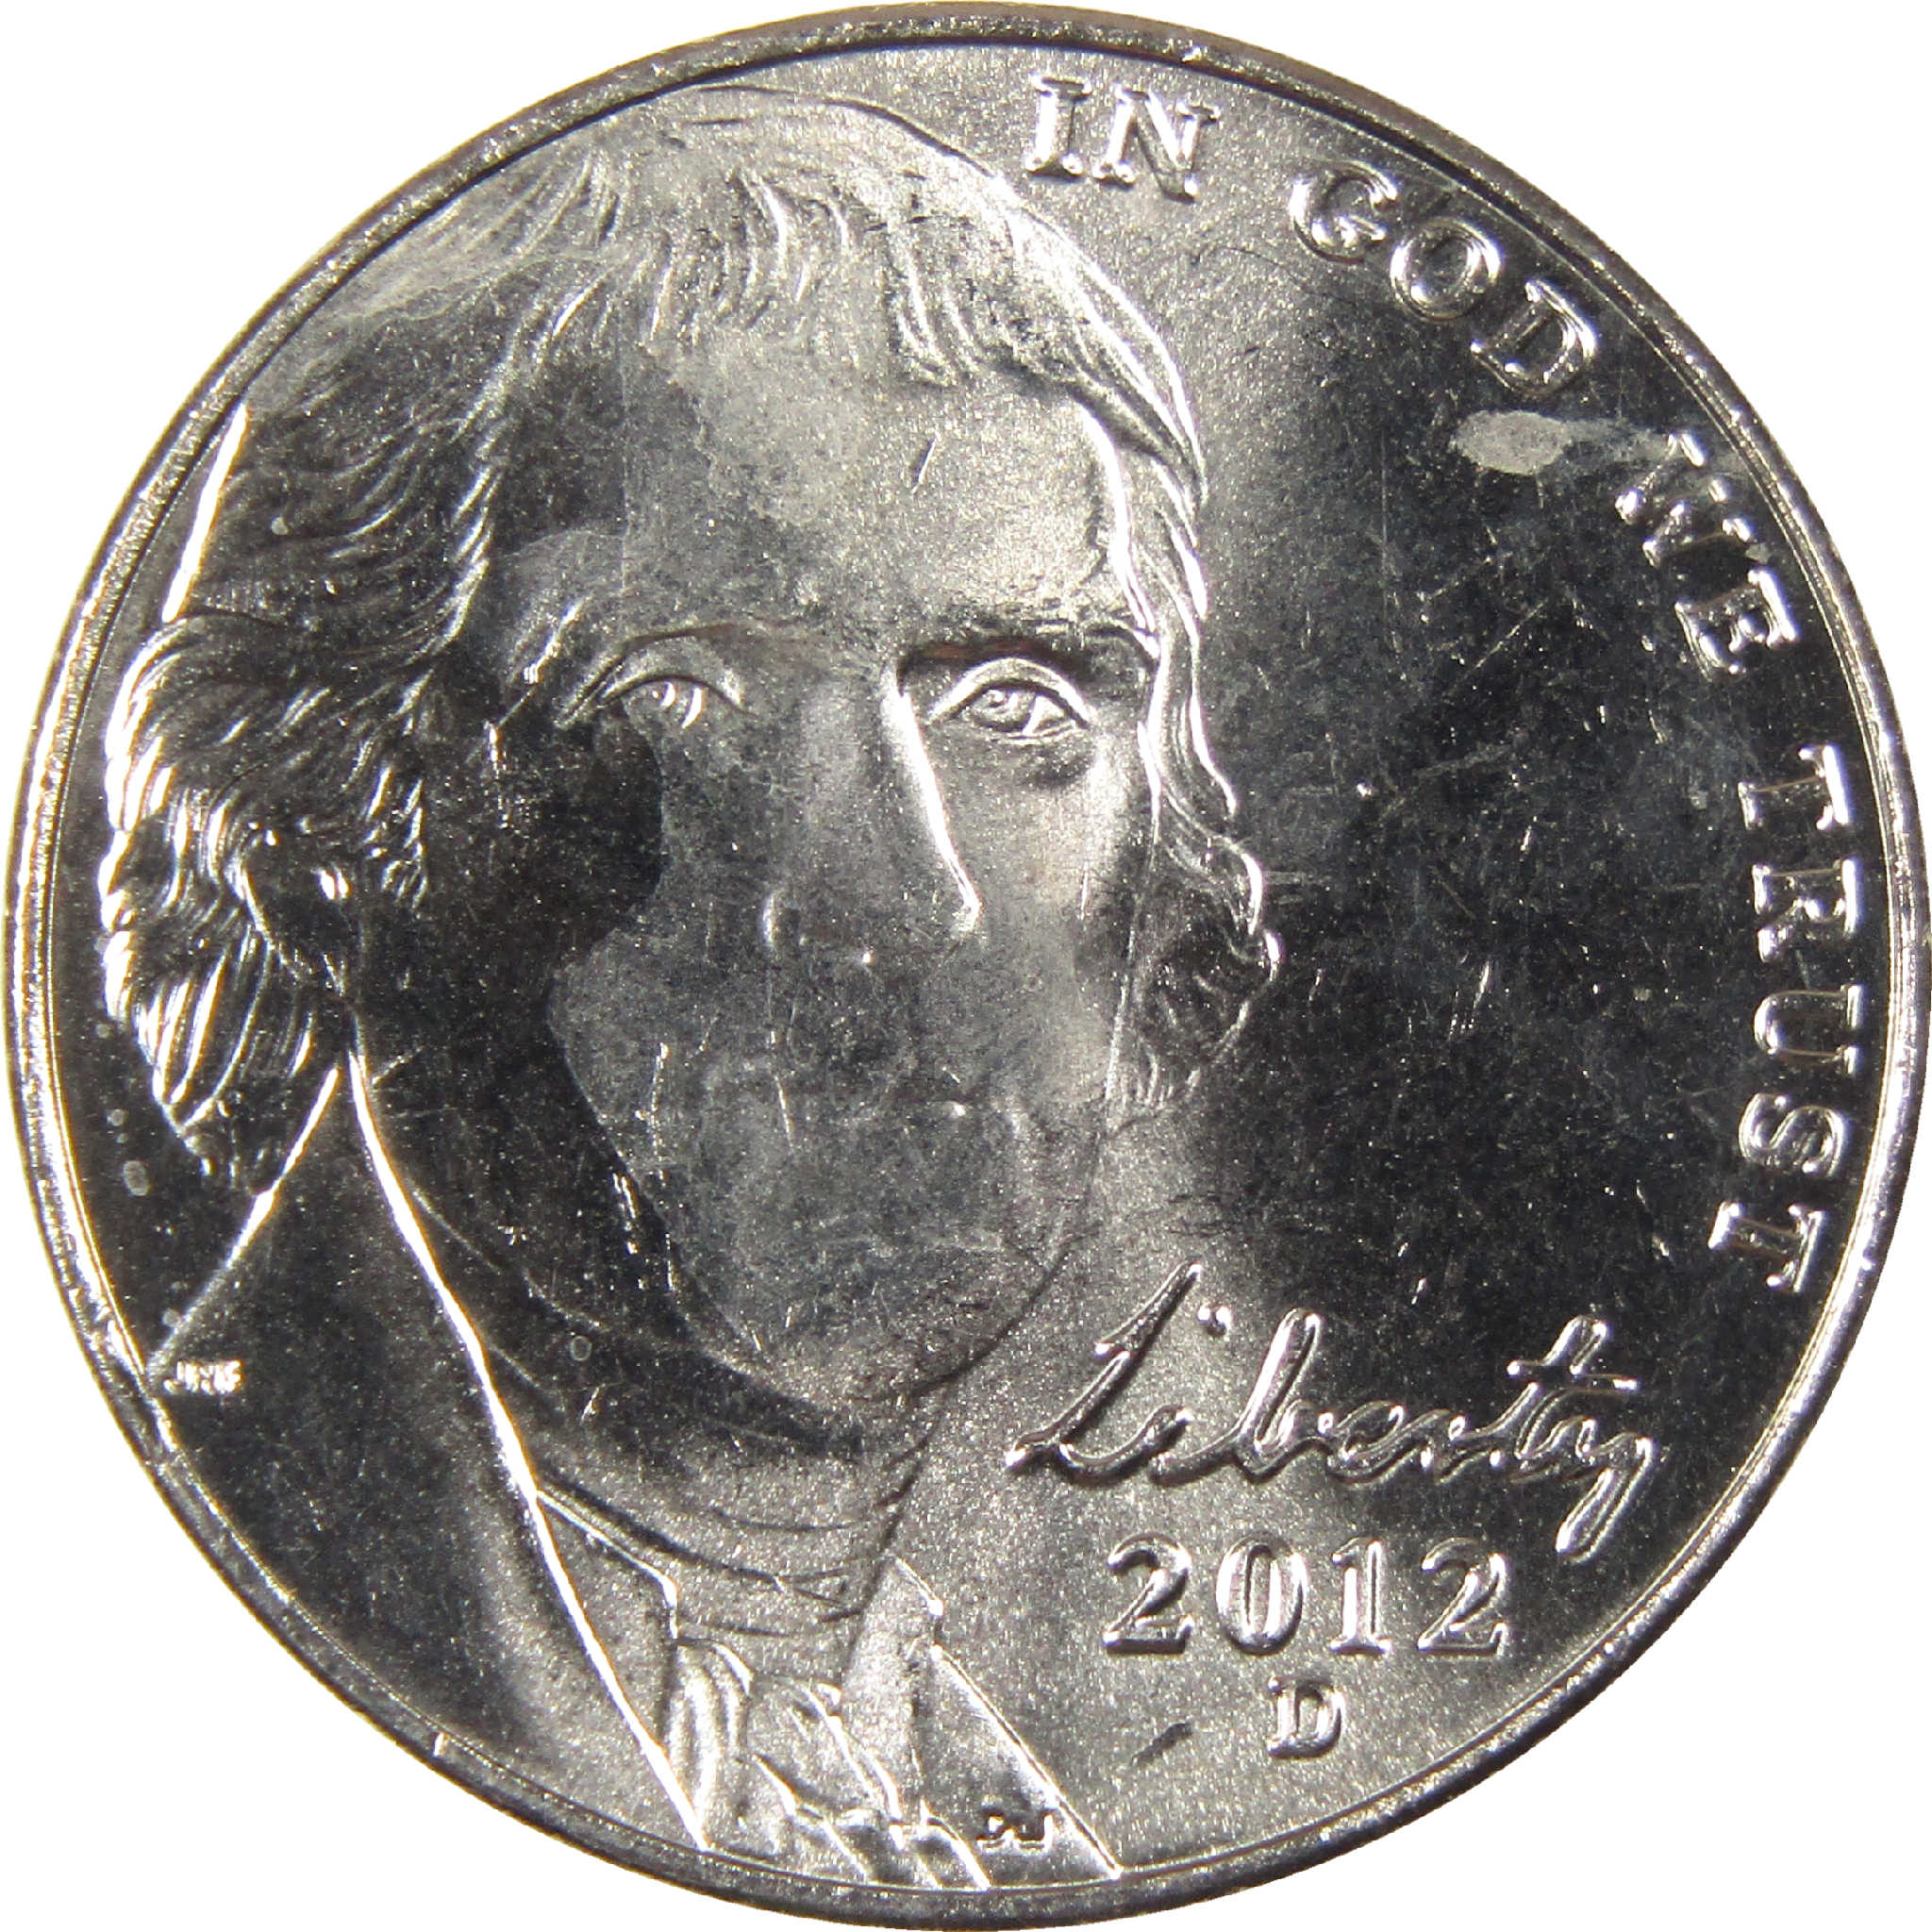 2012 D Jefferson Nickel Uncirculated 5c Coin